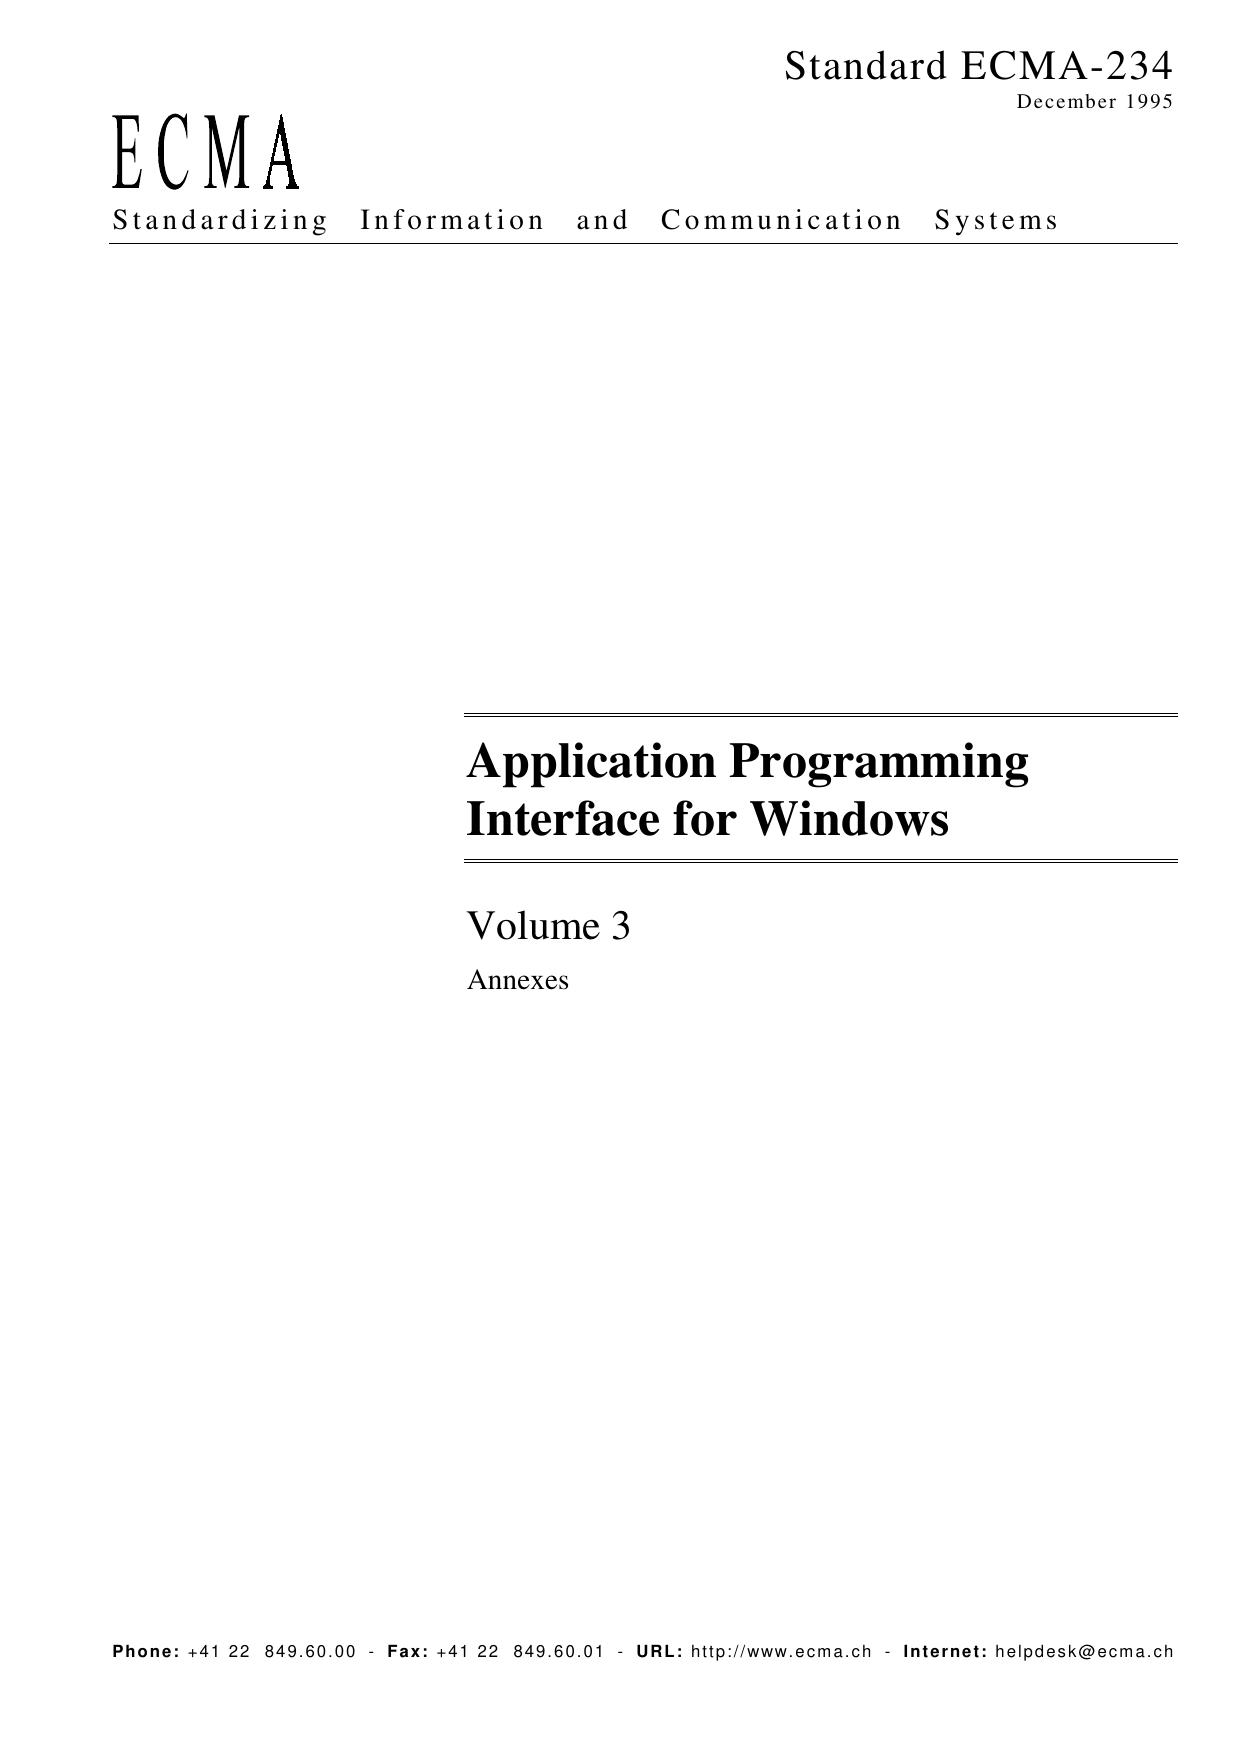 Microsoft Windows Win32 API Reference: Application Programming Interface for Windows - Volume 3